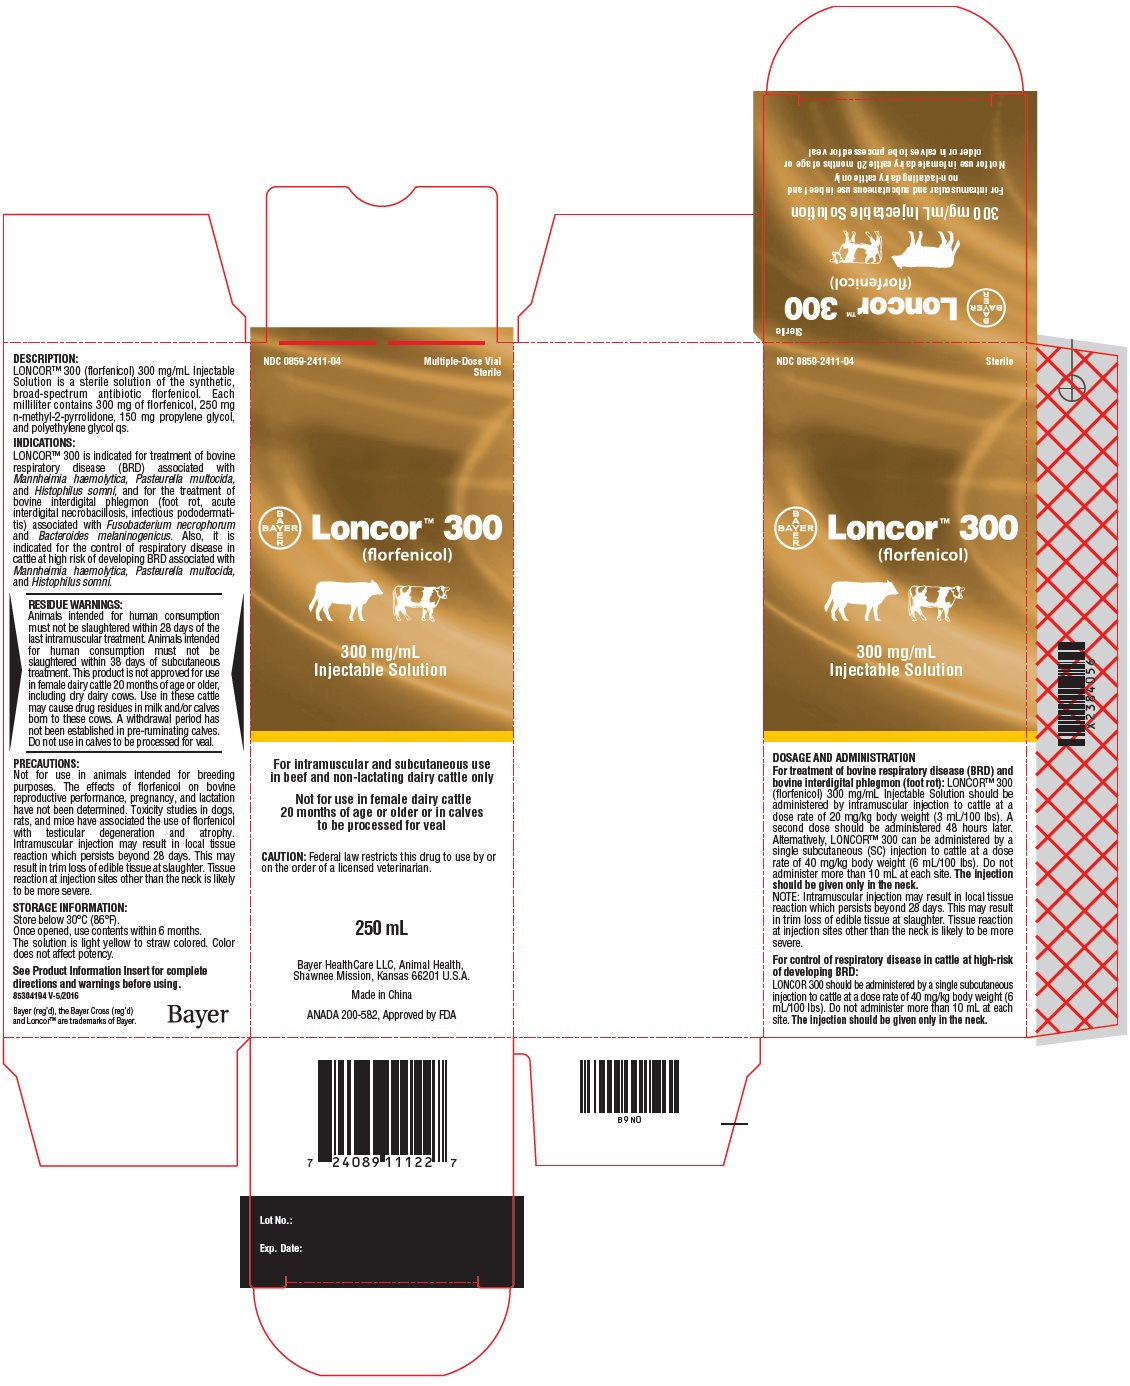 Loncor 300 (florfenicol) 300 mg/mL Injectable Solution carton label